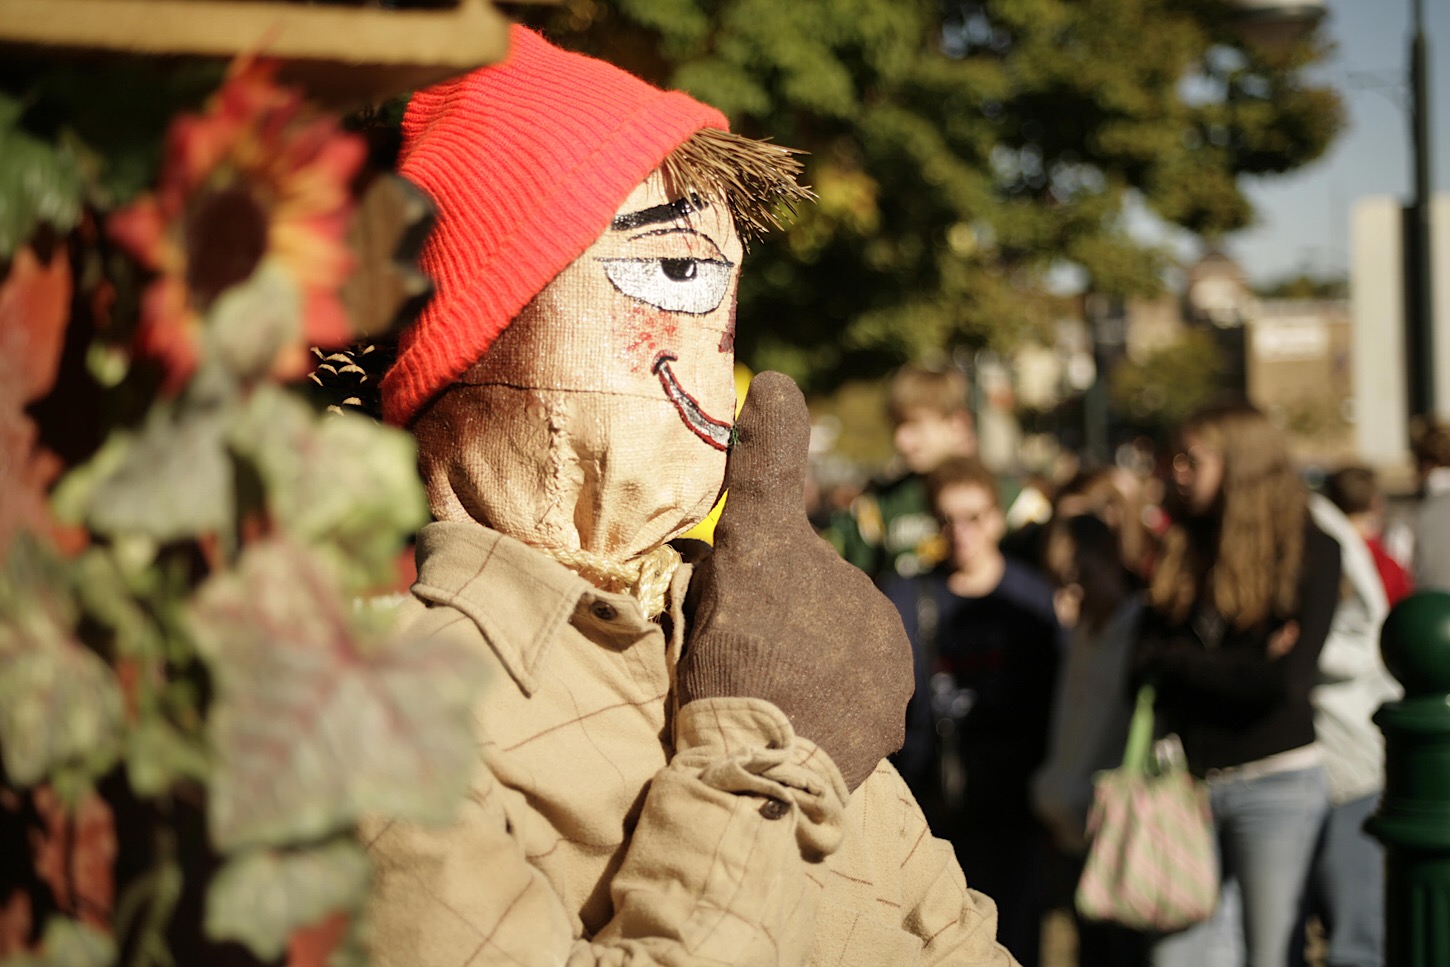 St. Charles Scarecrow Festivsal